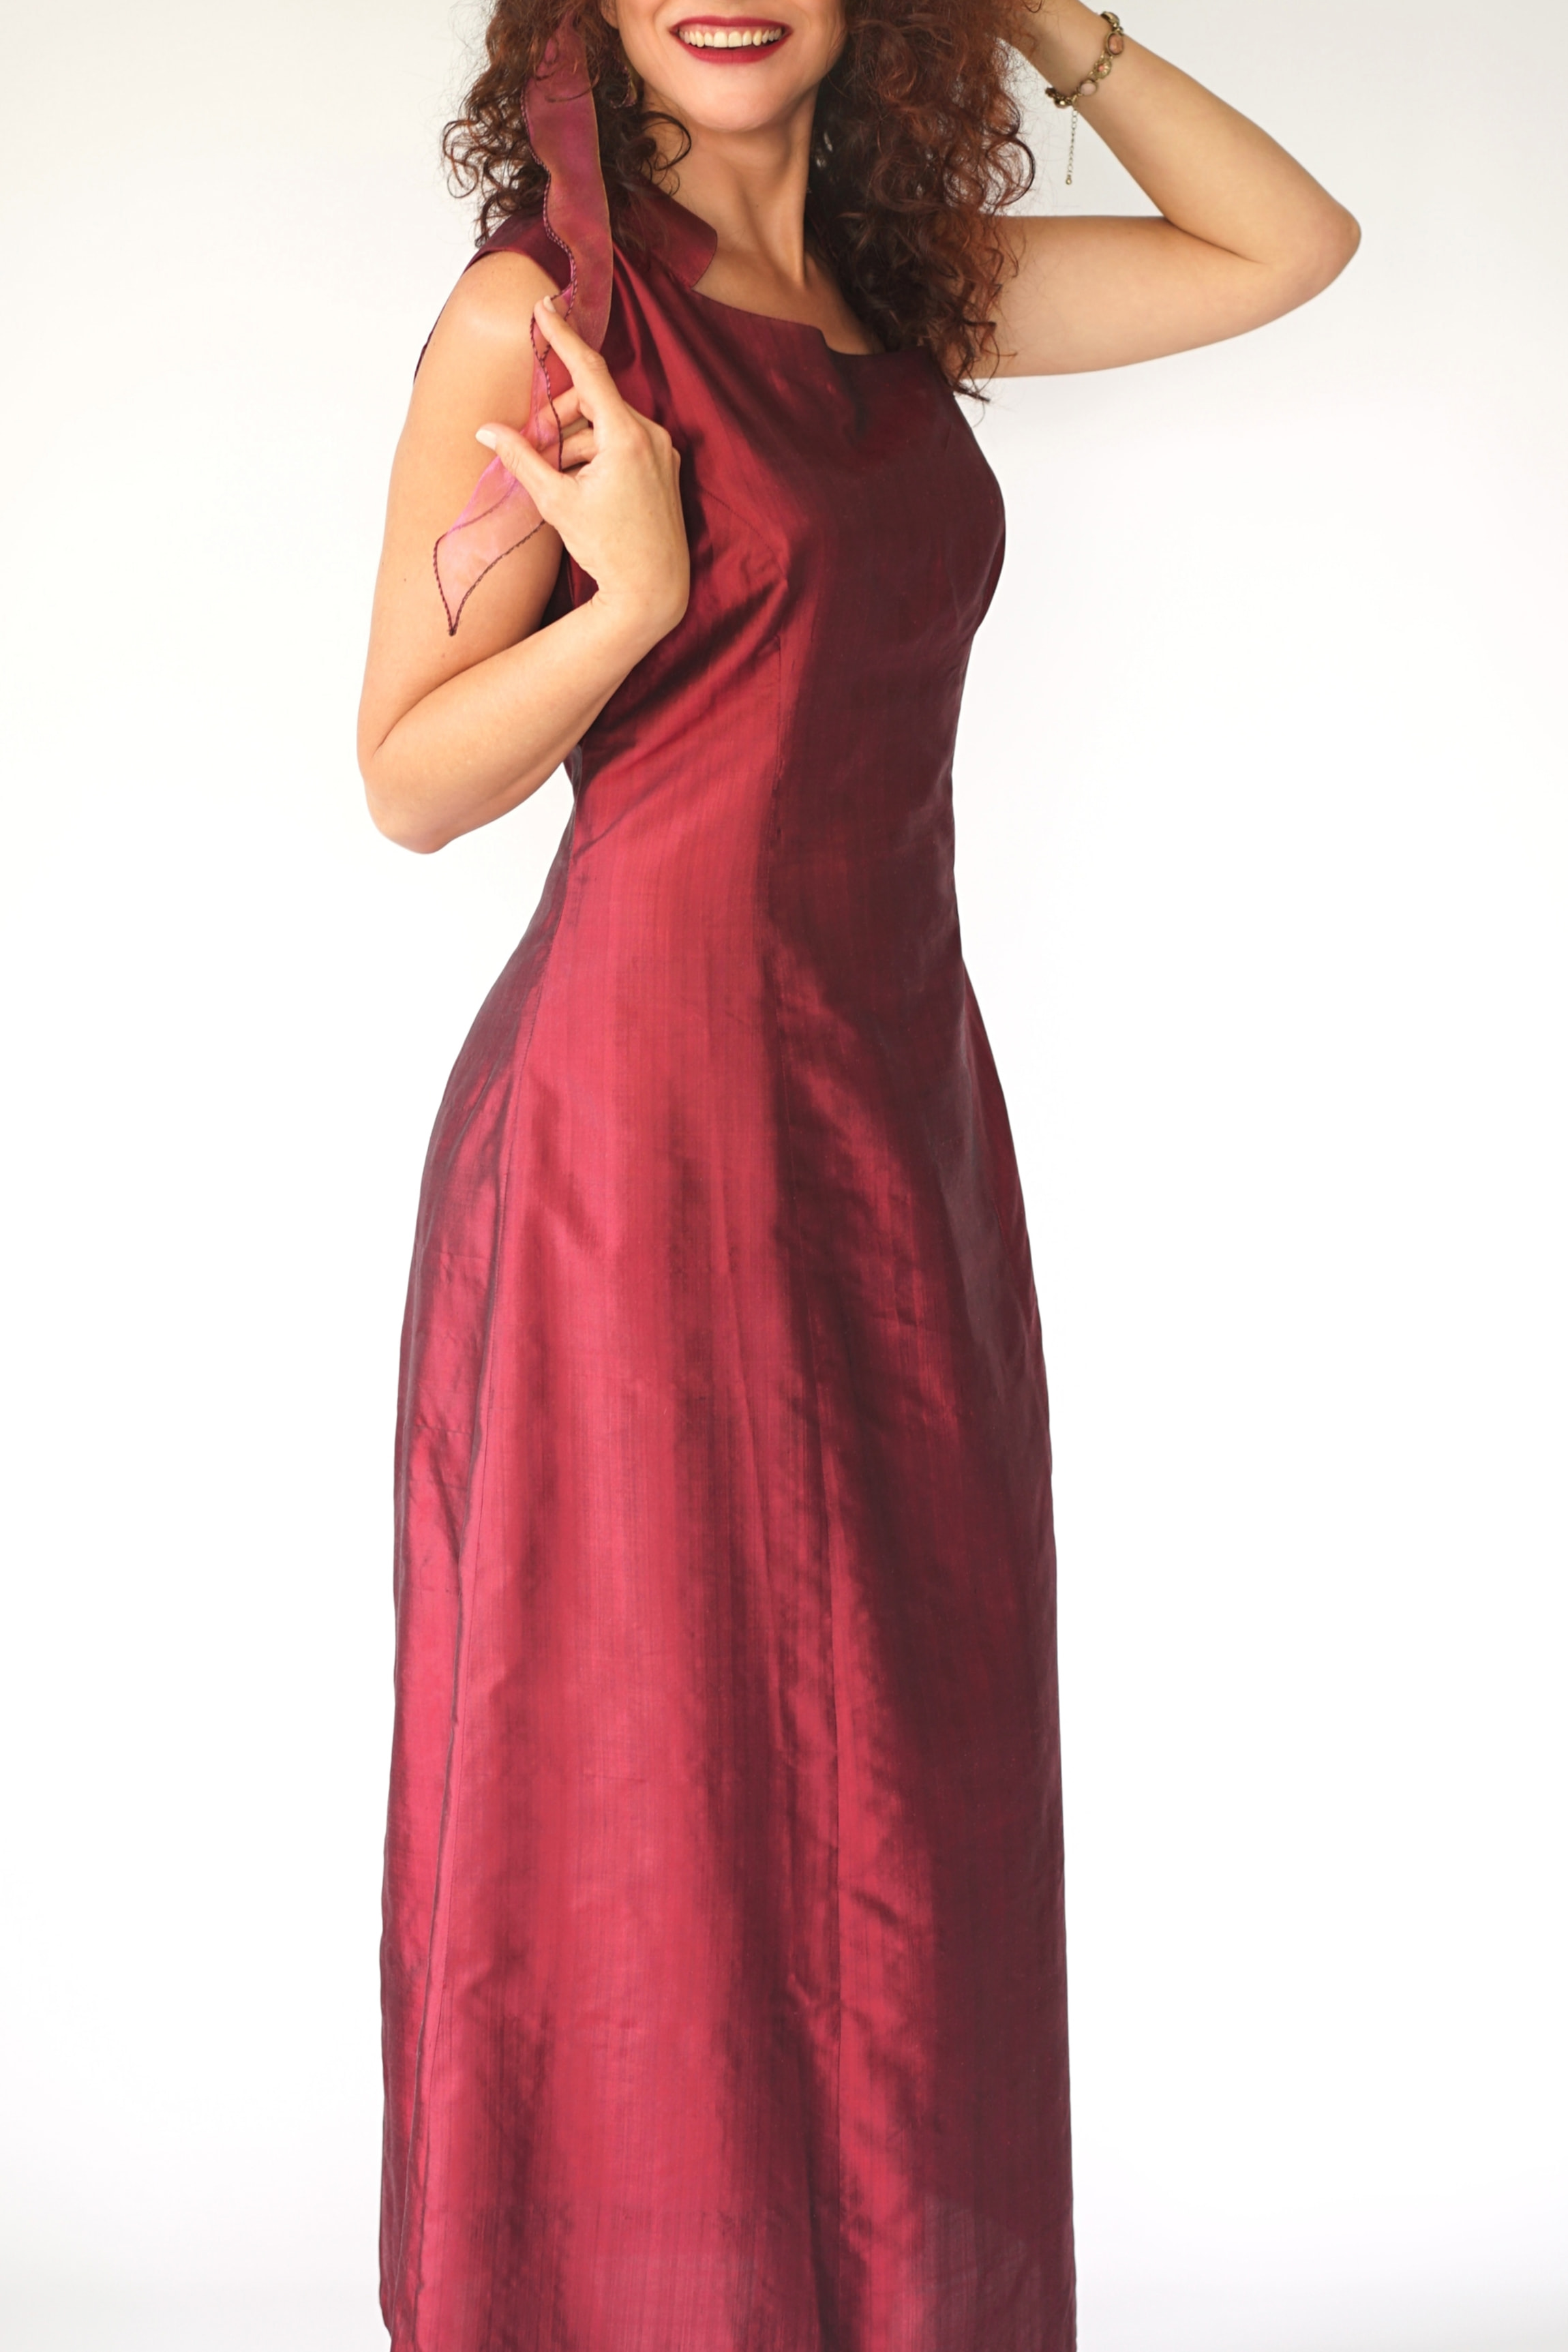 One-sleeve A-line evening dress with a slit skirt